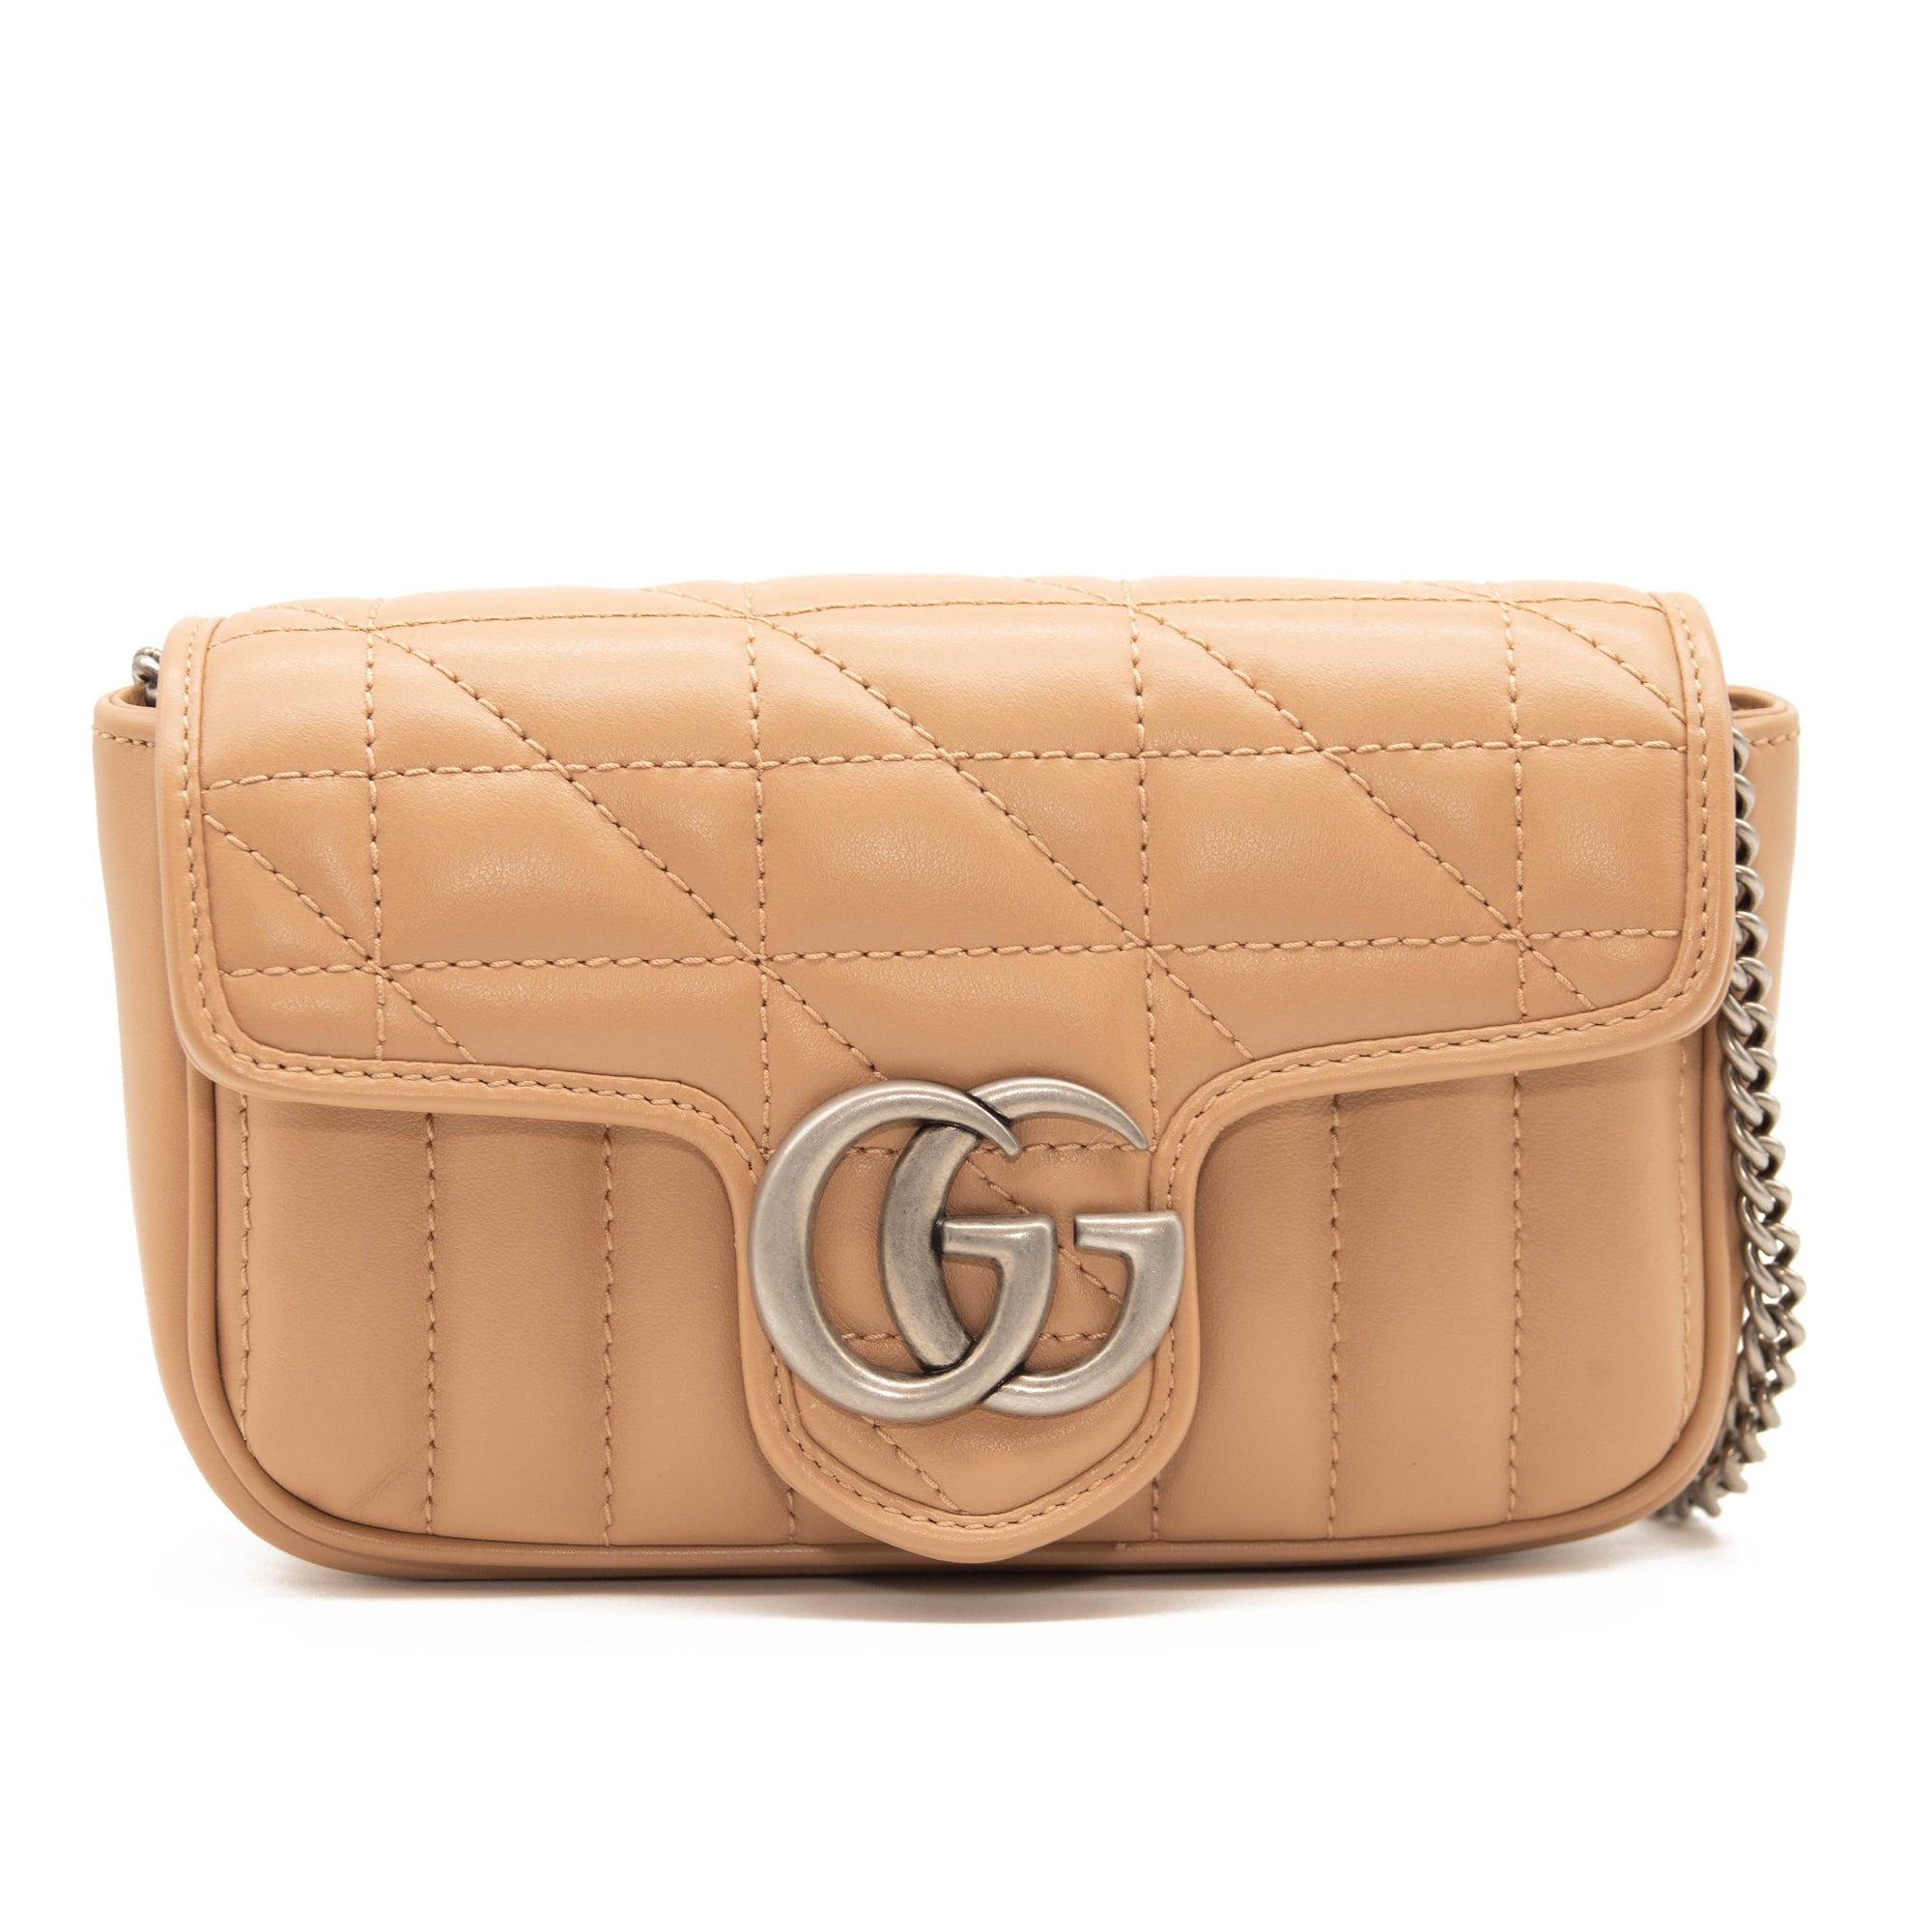 GG Marmont matelassé super mini bag in rose beige leather